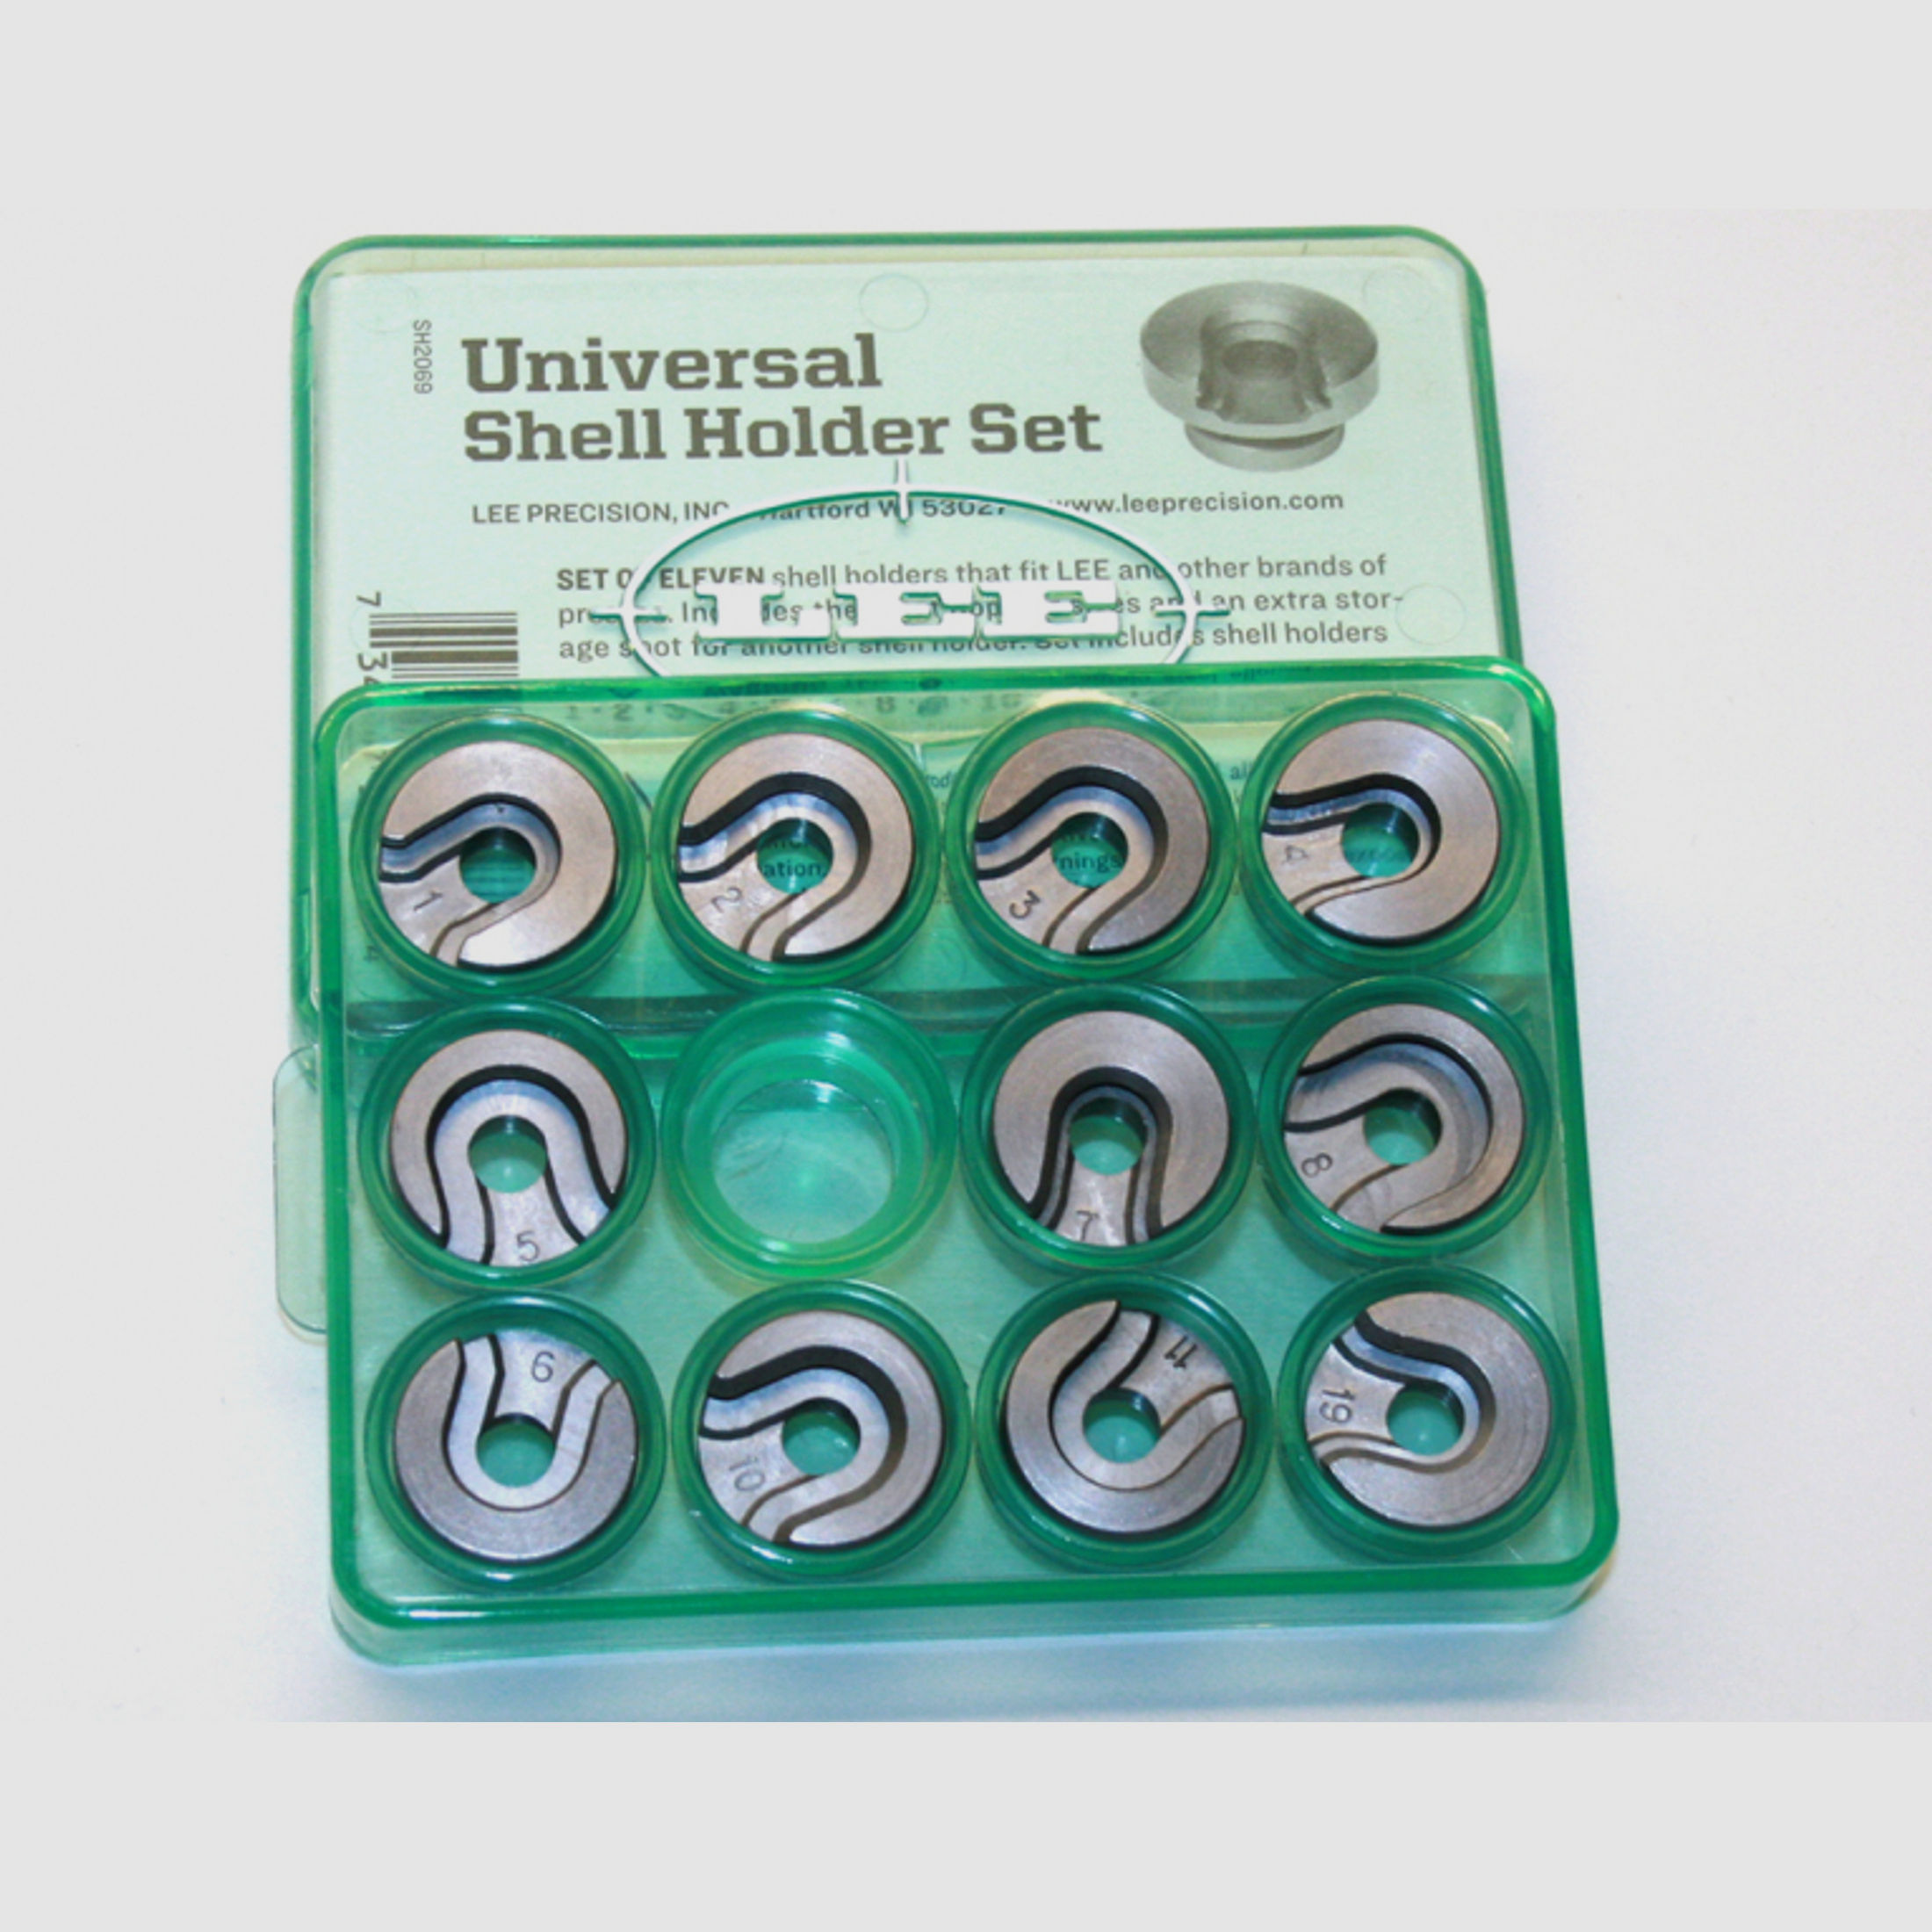 LEE Universal Press Shellholder SET Hülsenhalter 11 Stück für 115 Kaliber! 1,2,3,4,5,7,8,9,10,11,19